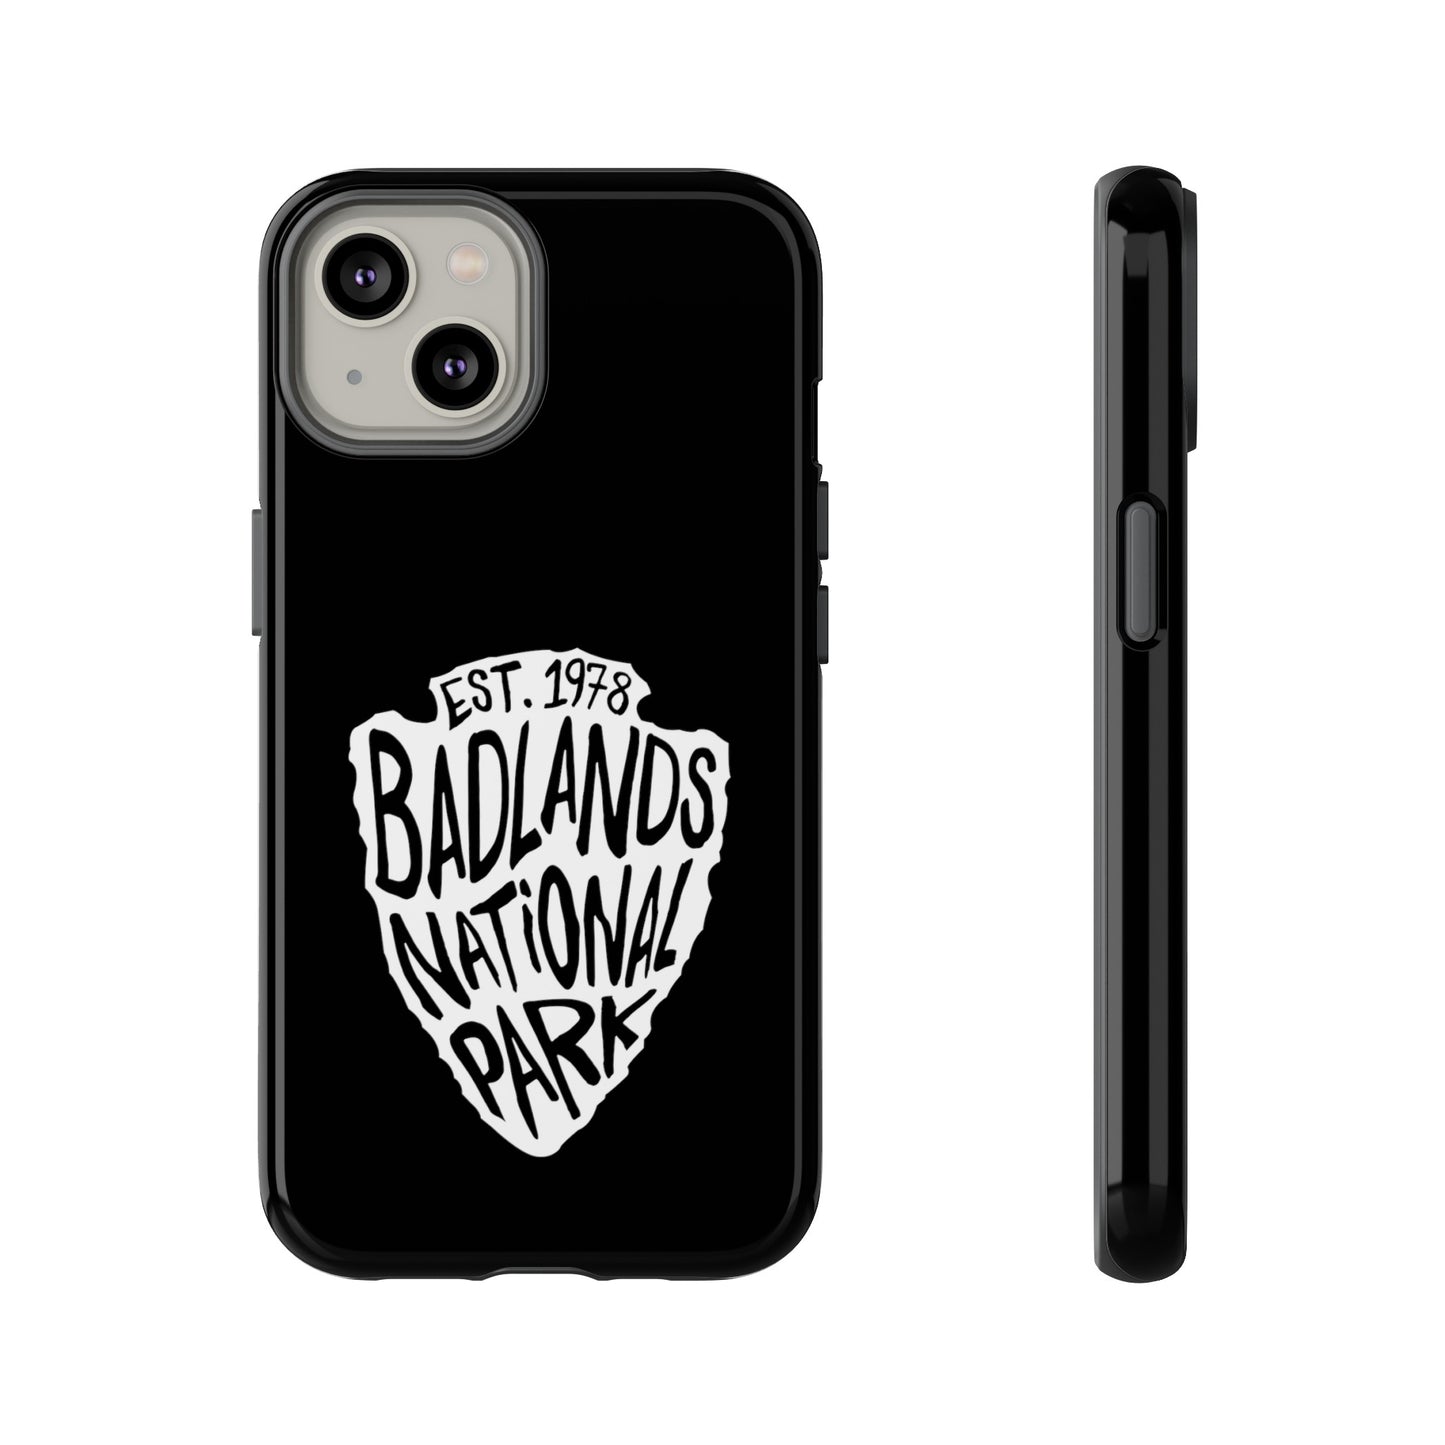 Badlands National Park Phone Case - Arrowhead Design